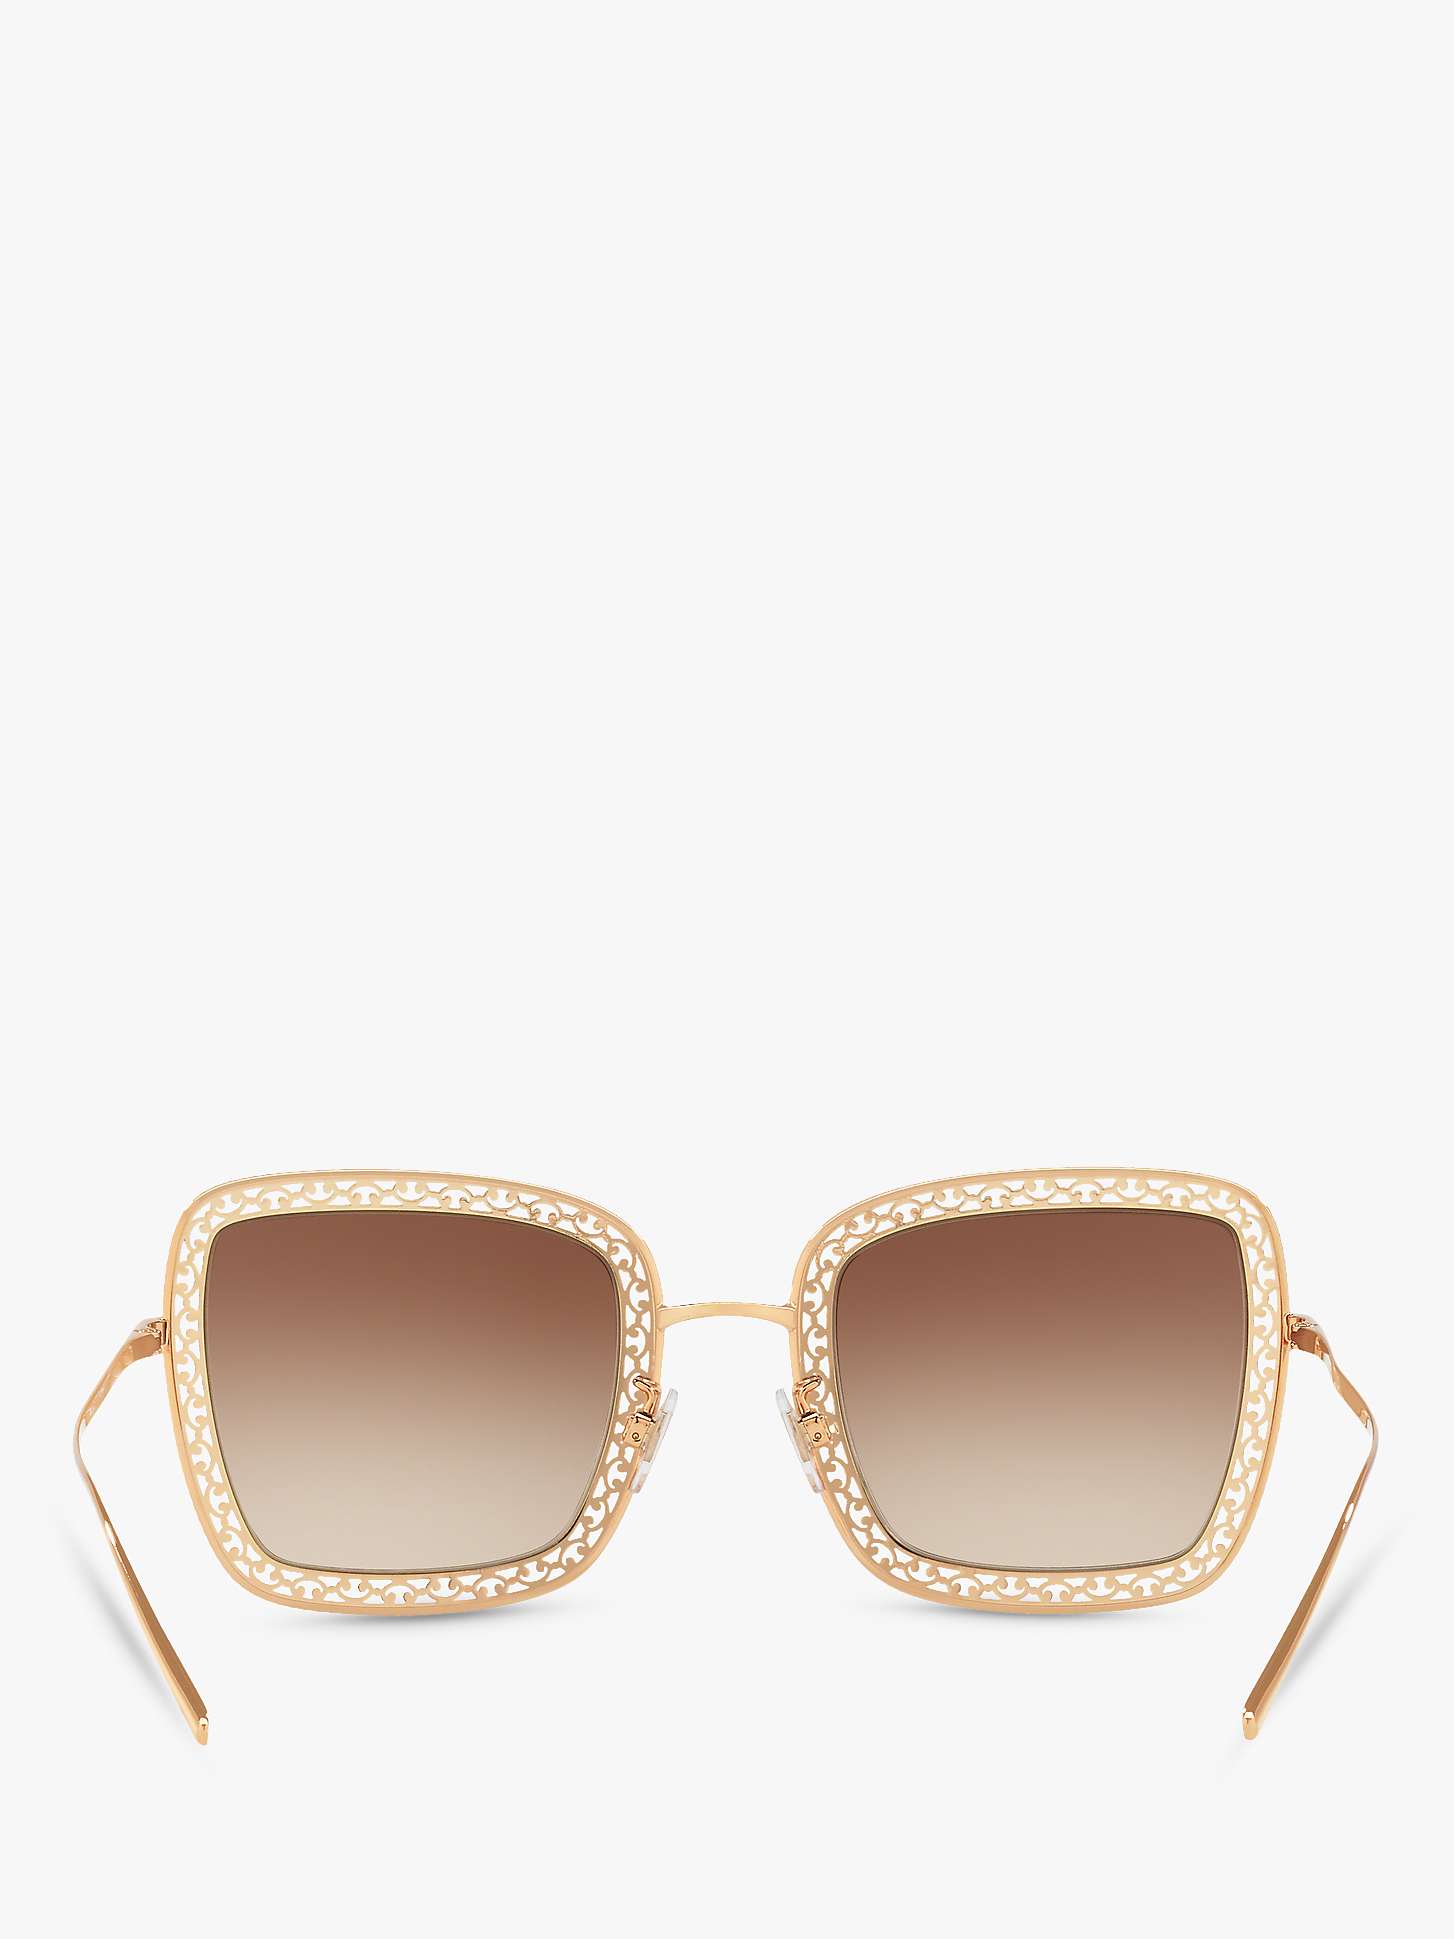 Dolce & Gabbana DG2225 Women's Square Sunglasses, Gold/Brown Gradient ...